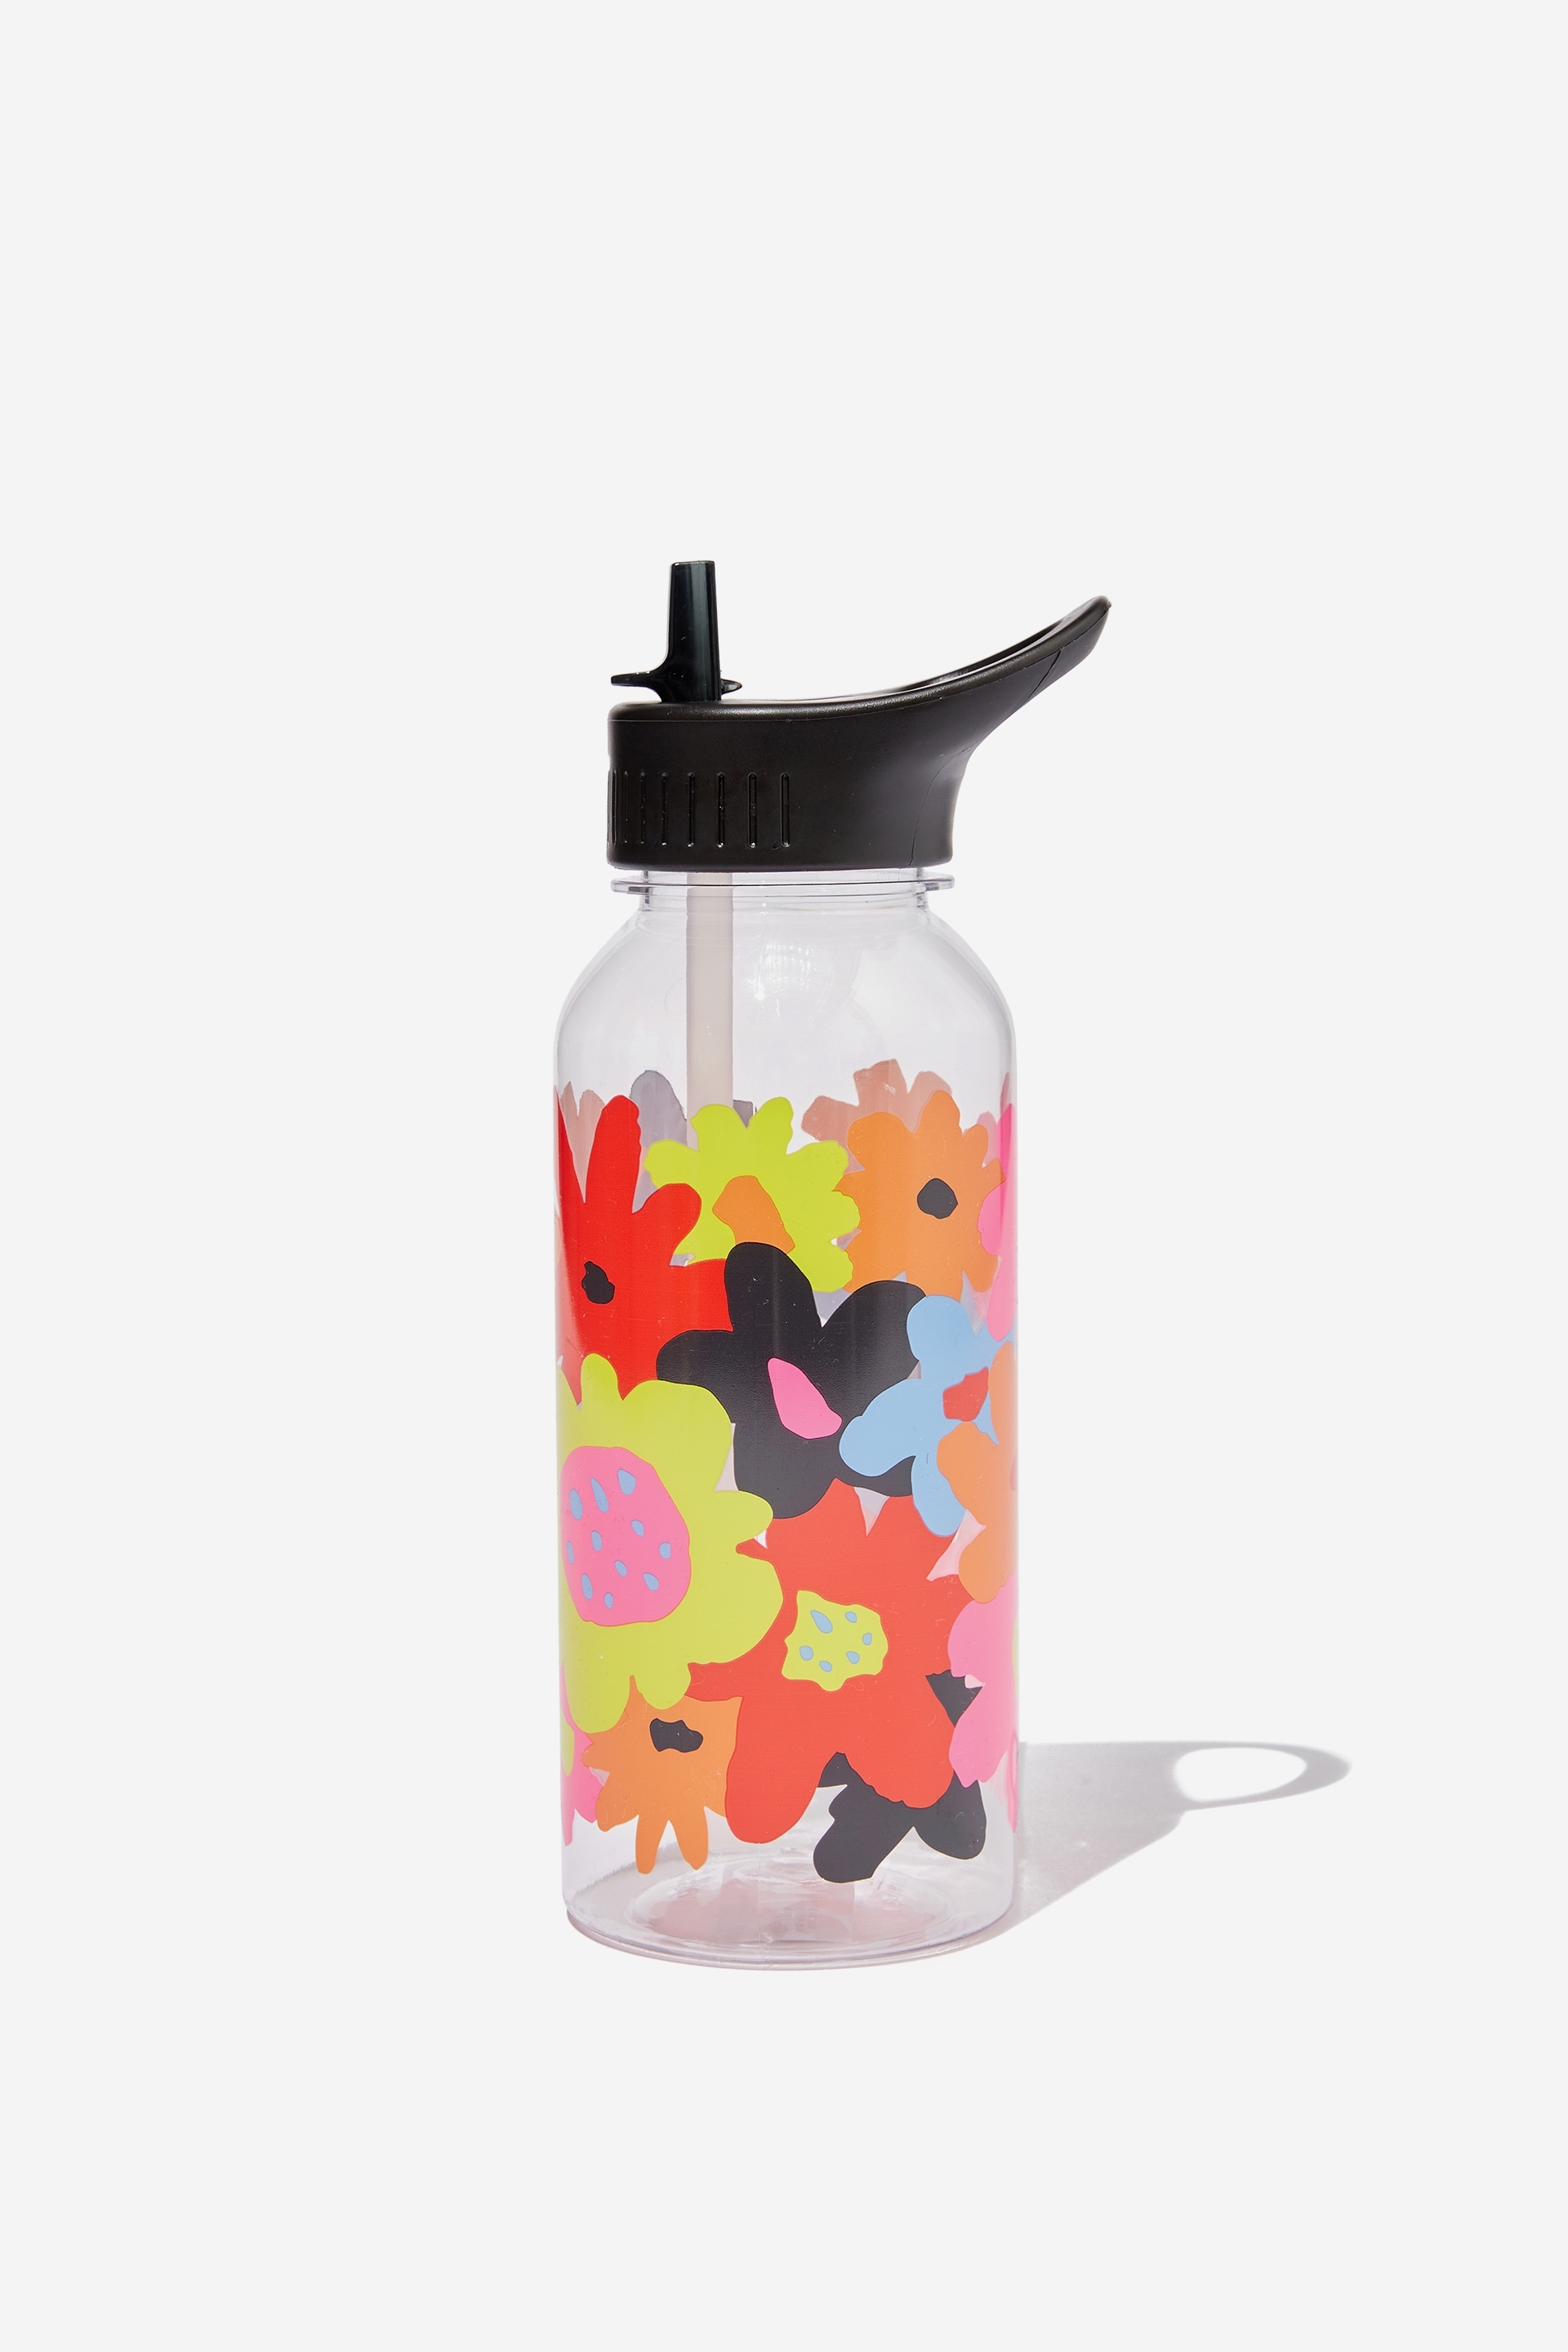 Typo - Drink It Up Bottle - Overlap floral maximalist neon